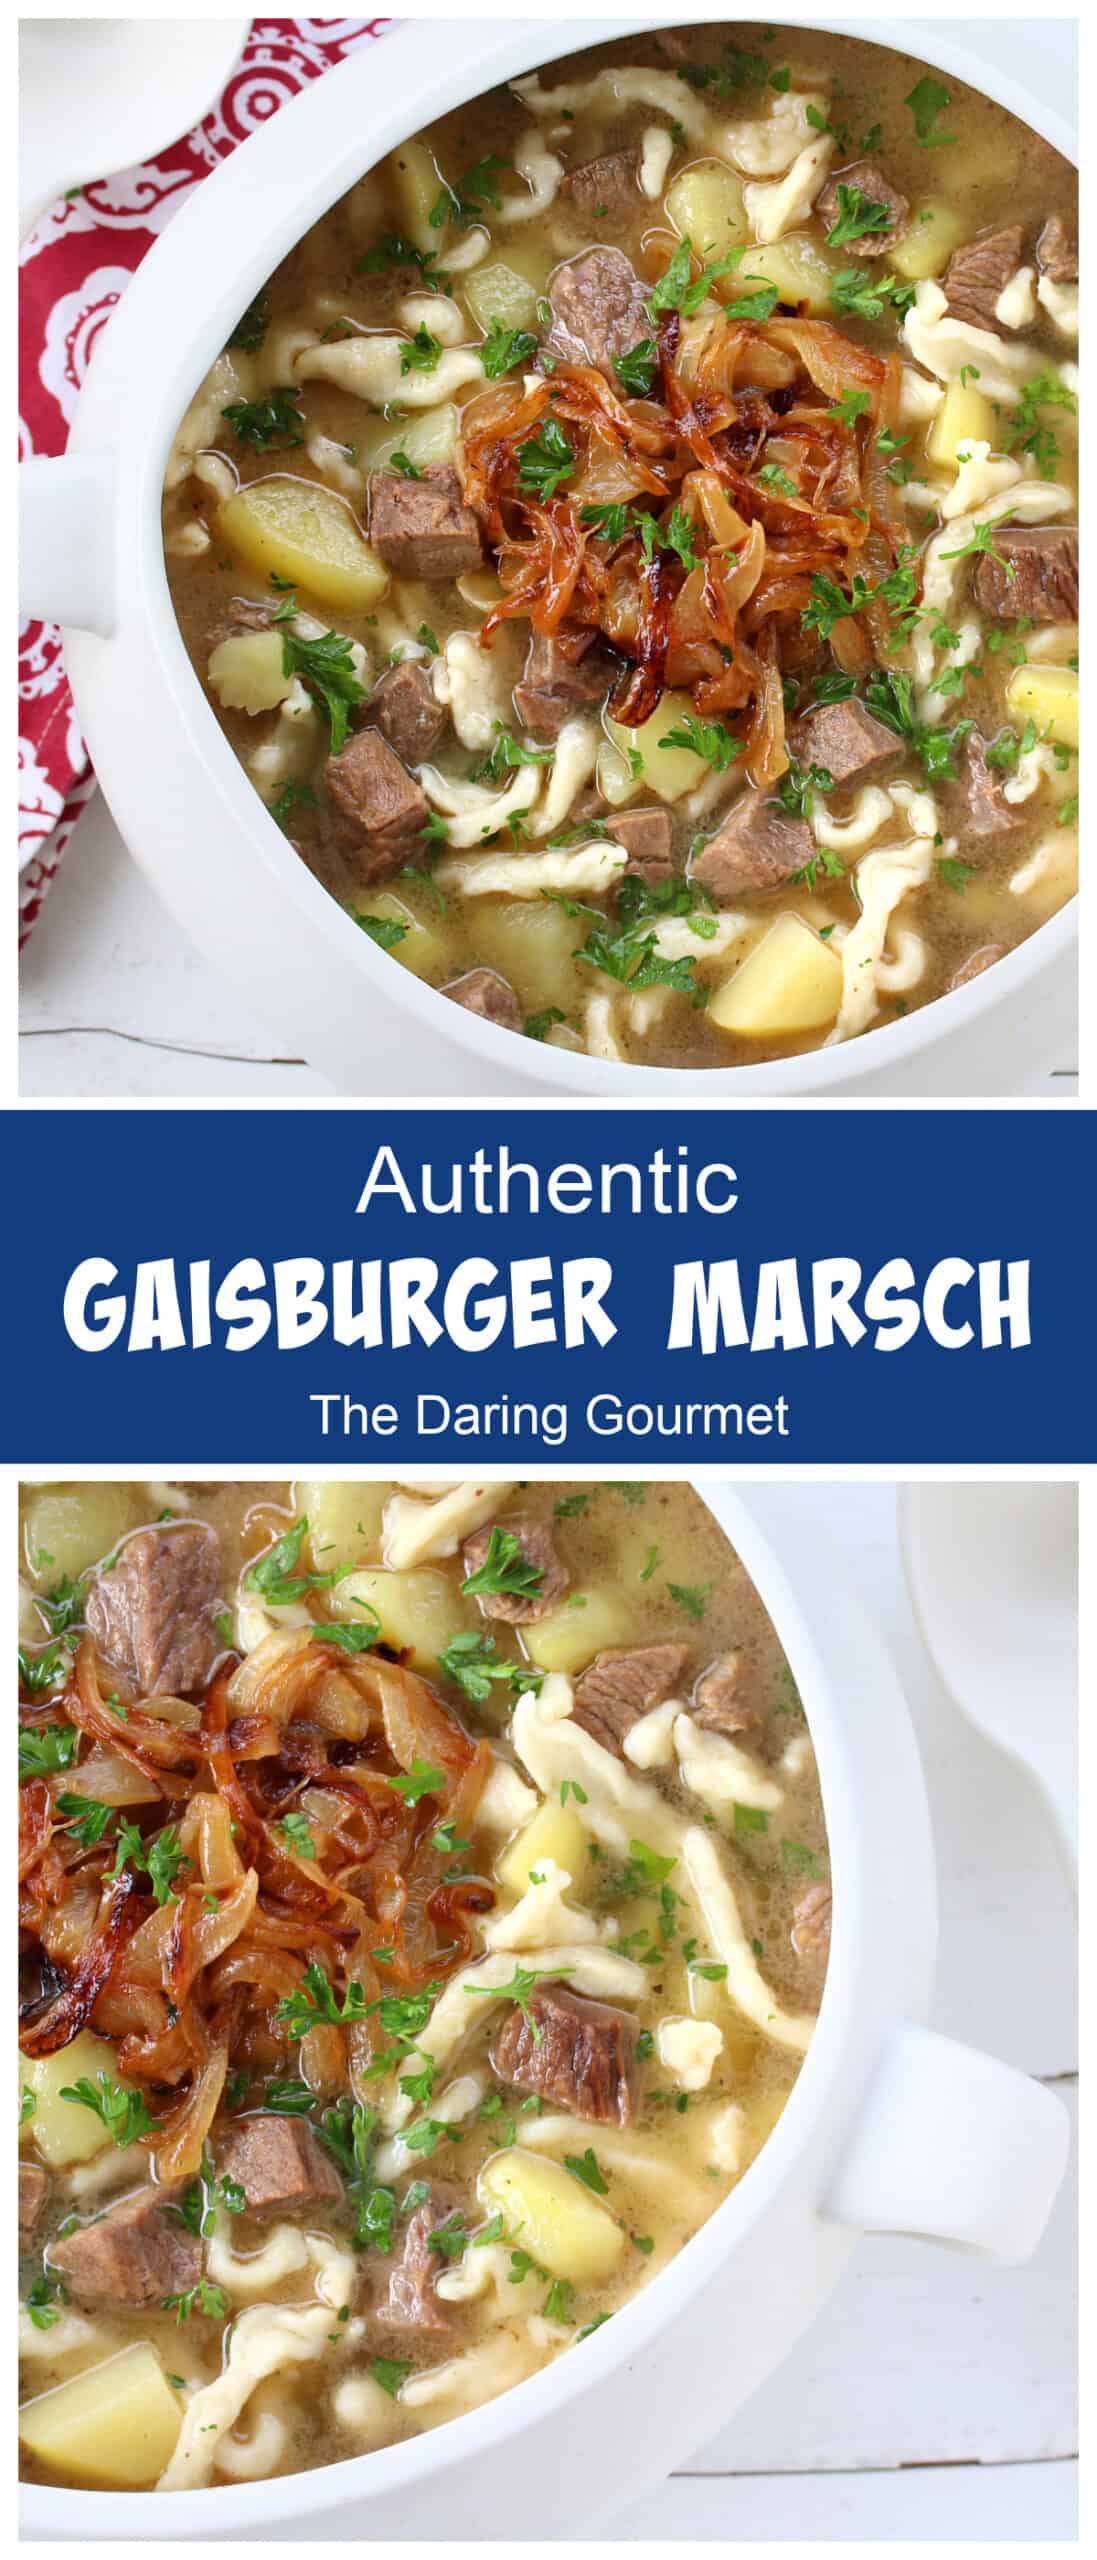 gaisburger marsch recipe authentic traditional german swabian stew soup spaetzle caramelized onions beef vegetables